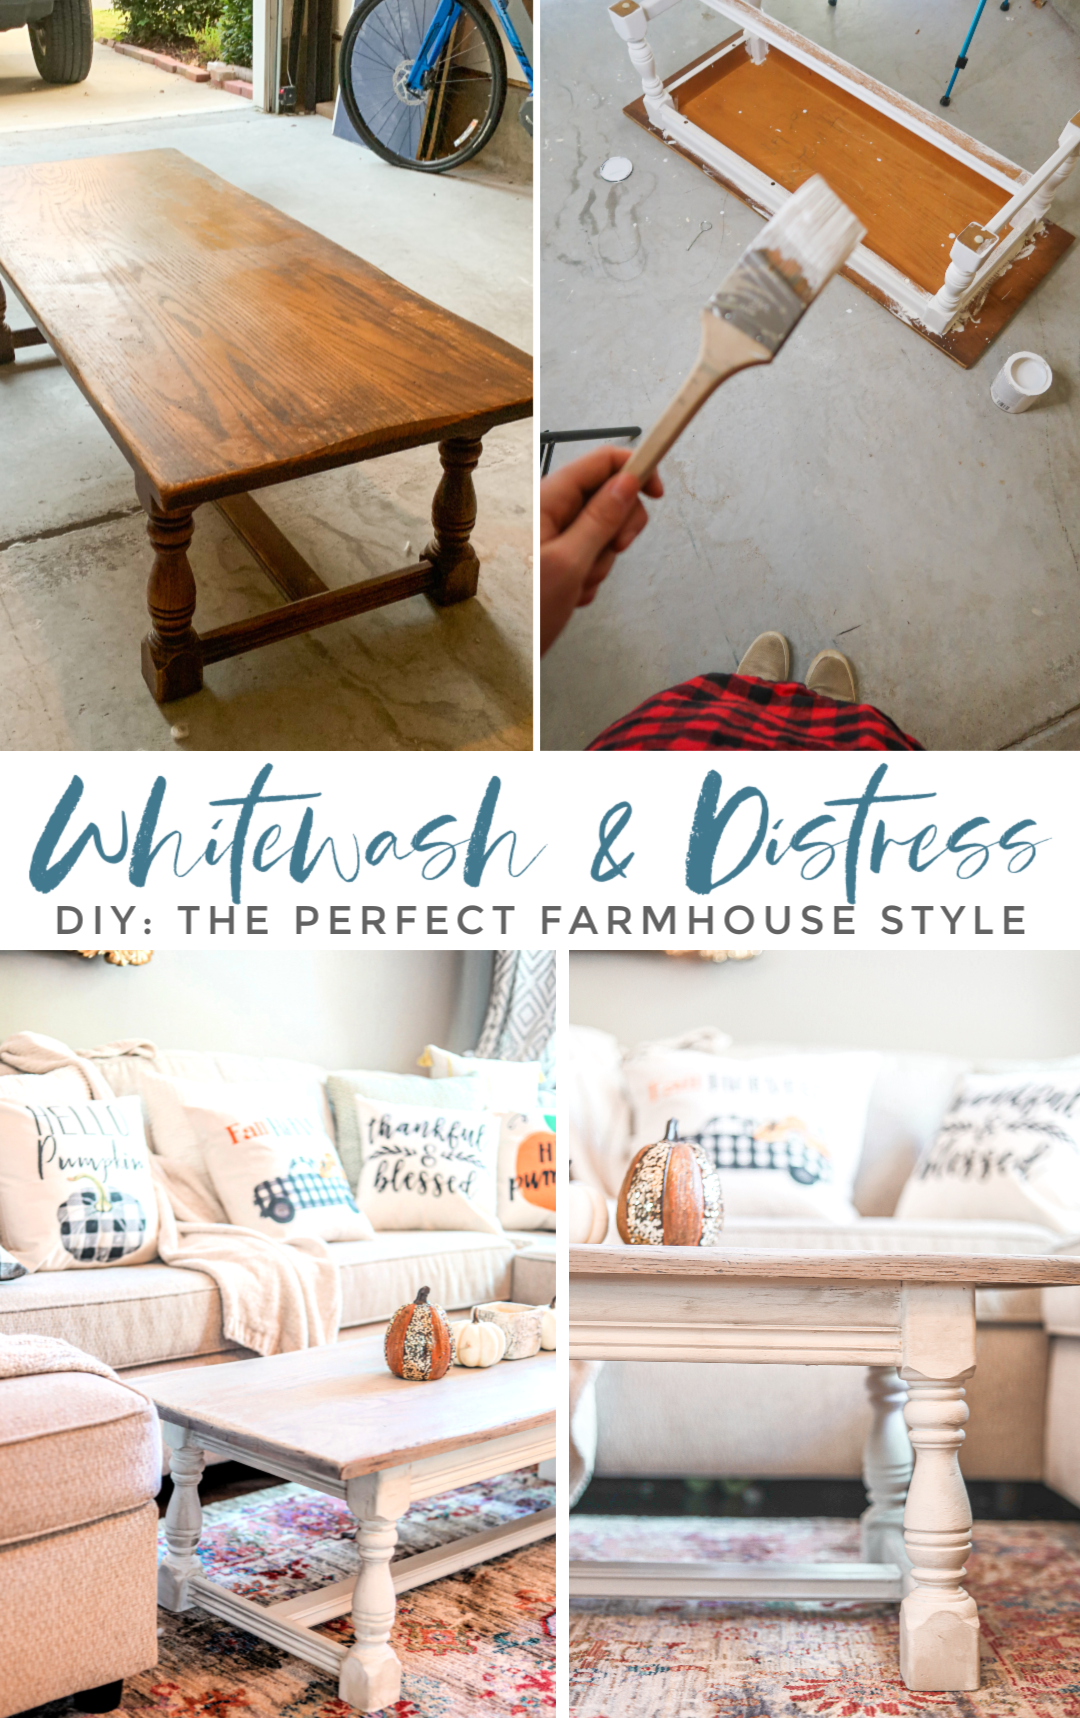 How to Whitewash & Distress Furniture: DIY Coffee Table - Simply Taralynn | Food & Lifestyle